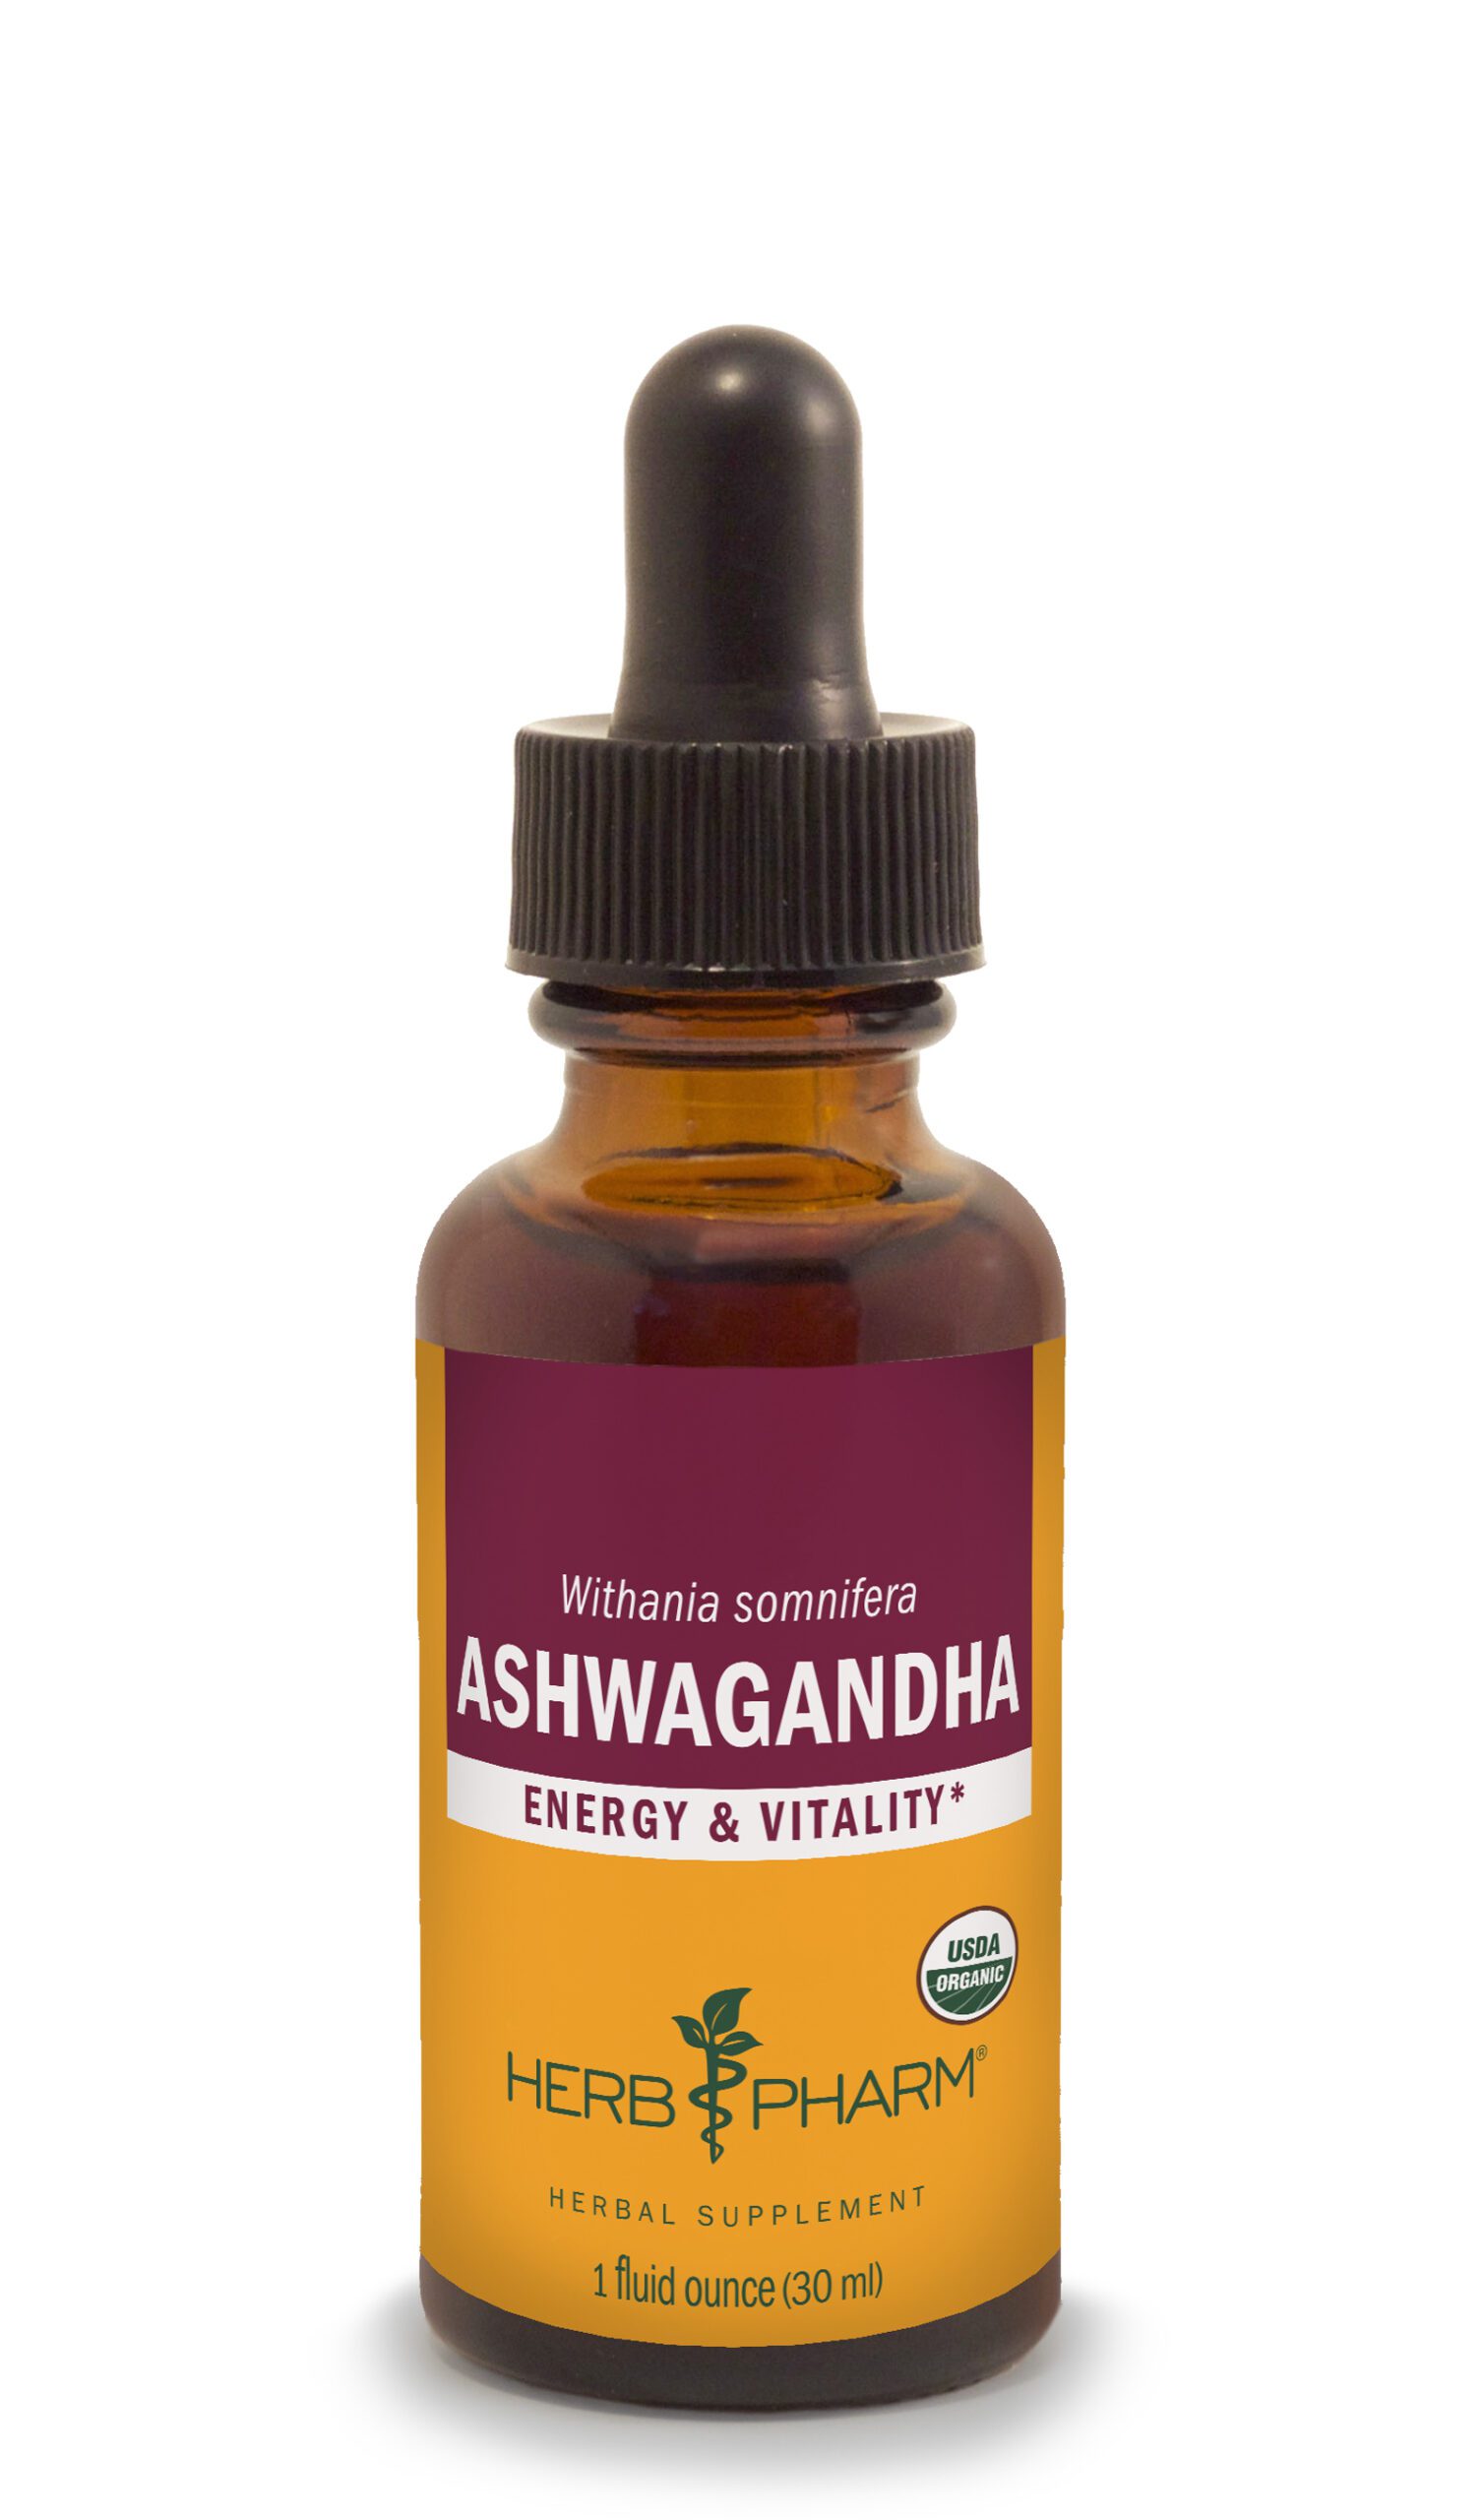 Product Listing Image for Herb Pharm Ashwagandha Tincture 1 oz